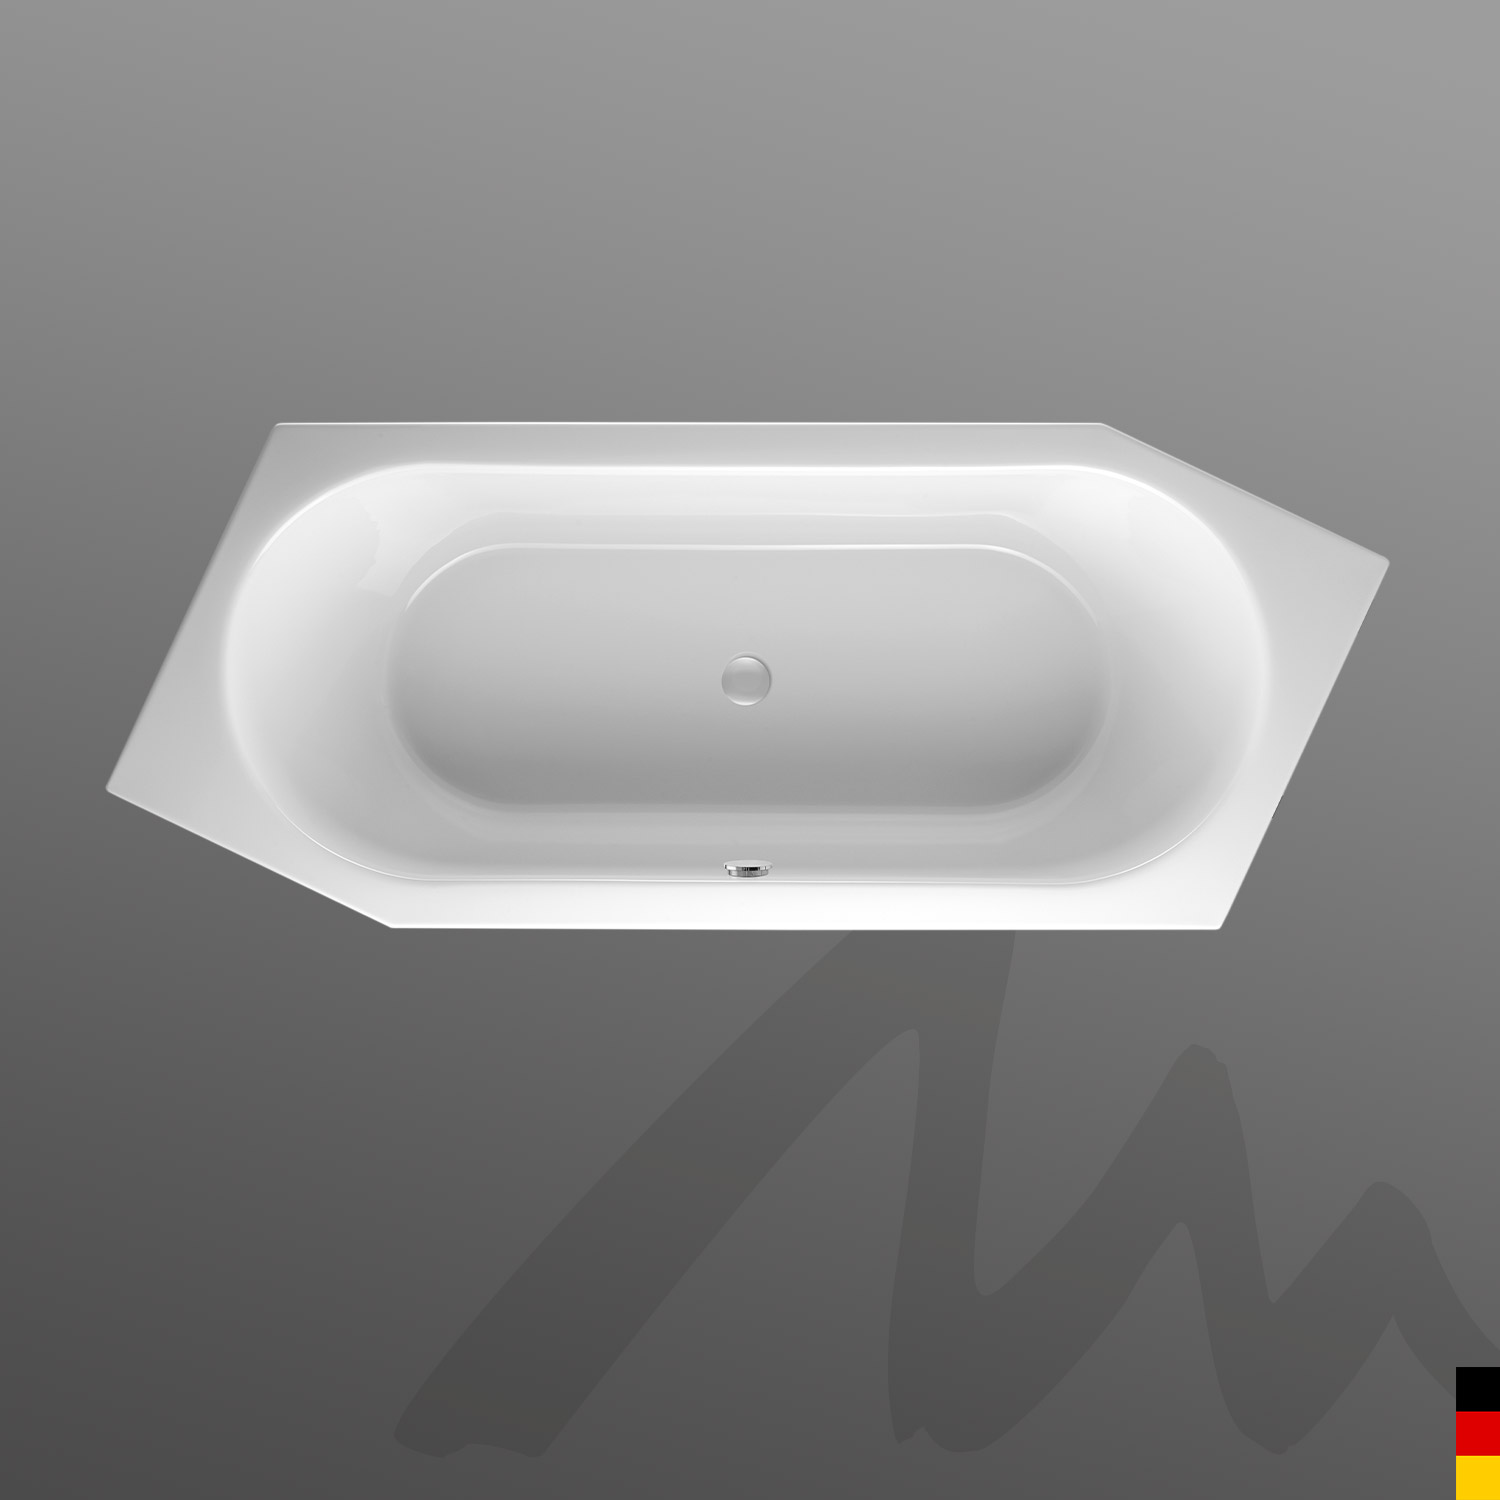 Mauersberger Badewanne 6-Eck Ovata asym 205/80 Ausführung rechts  205x80x45cm  Farbe:weiß